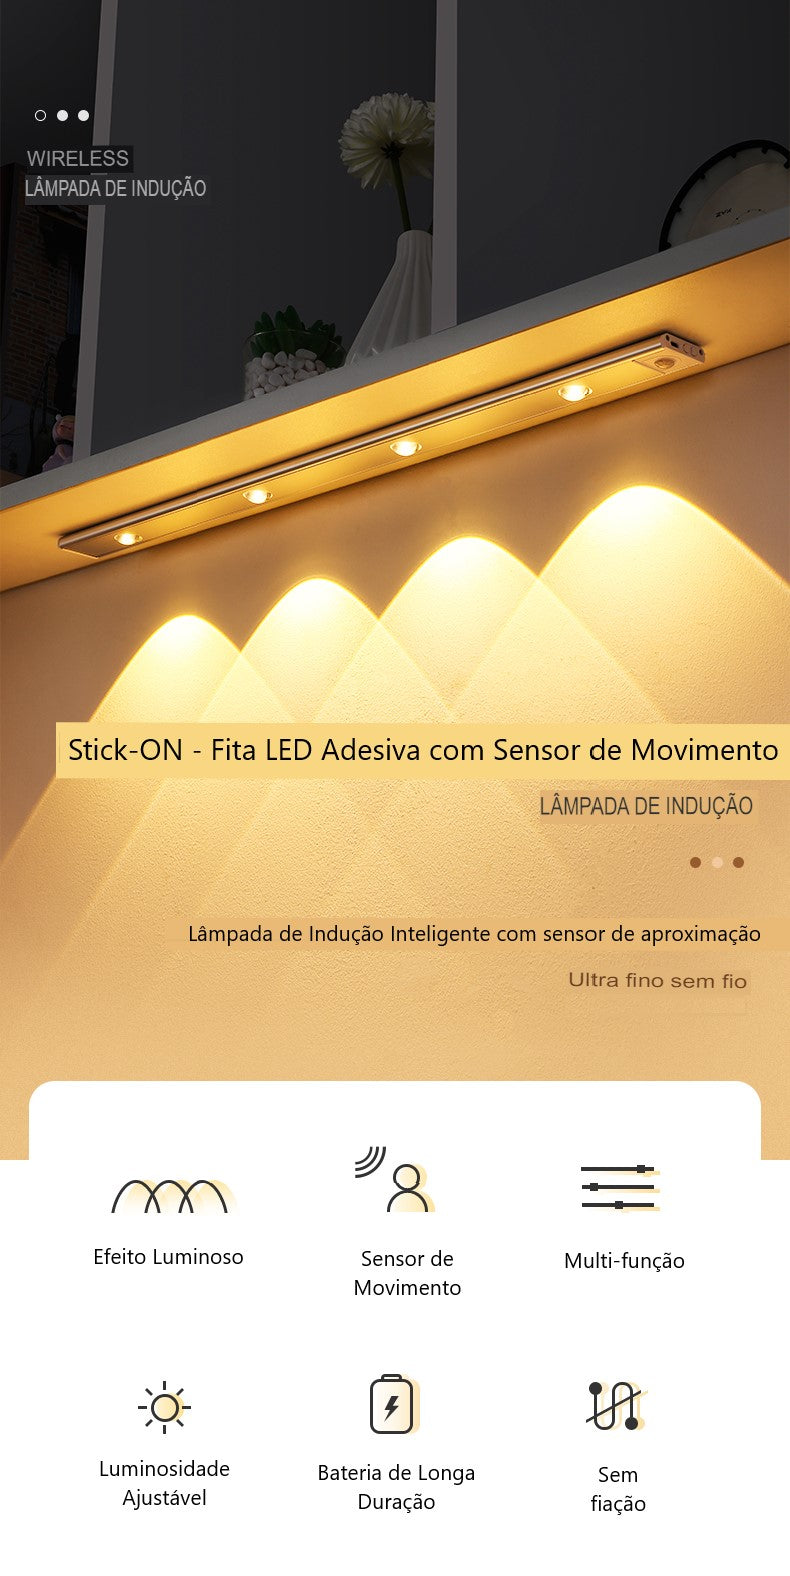 Stick-On - Fita LED Adesiva com Sensor de Movimento